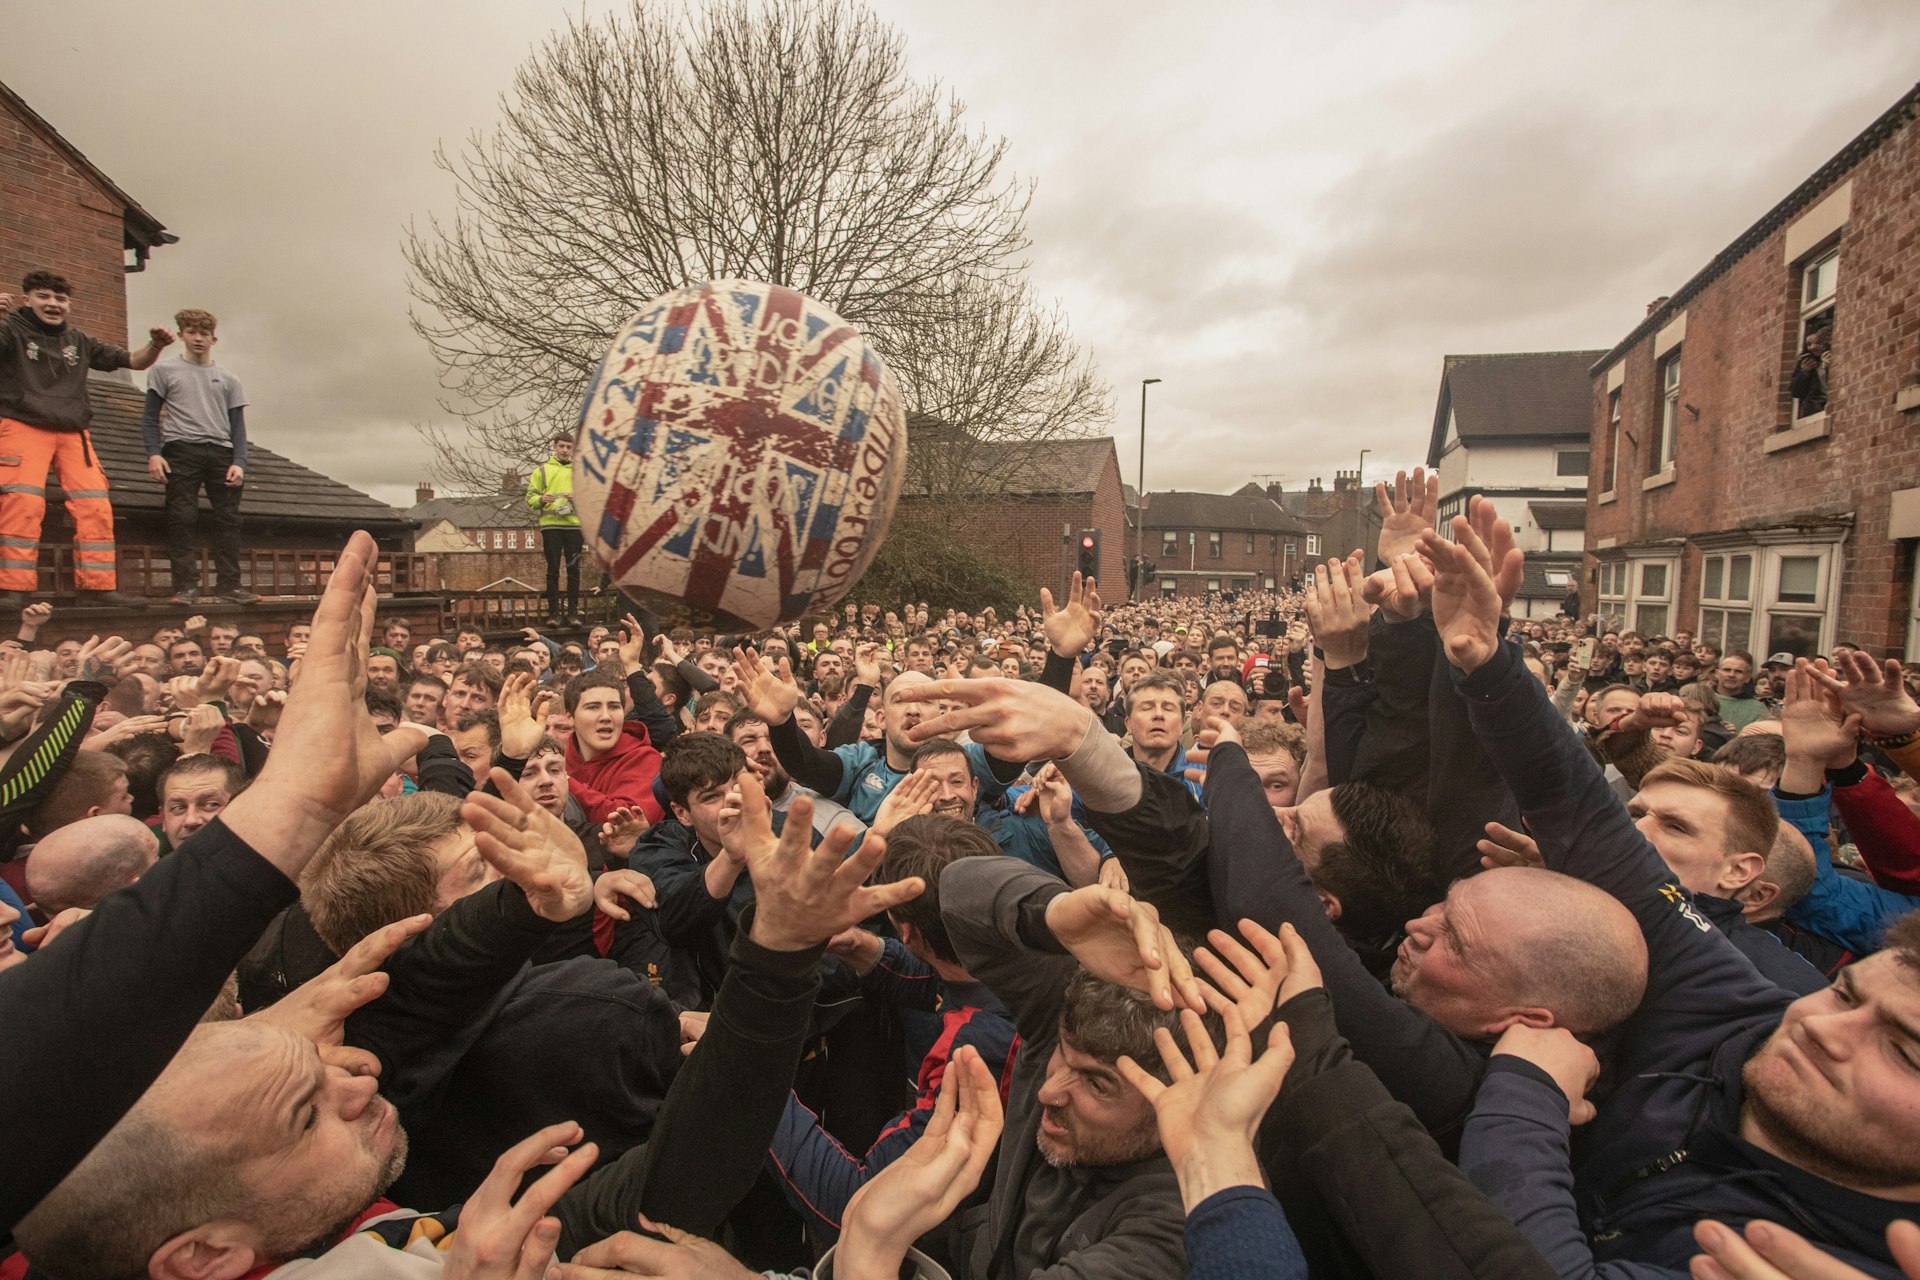 Striking photos of the Royal Shrovetide football match